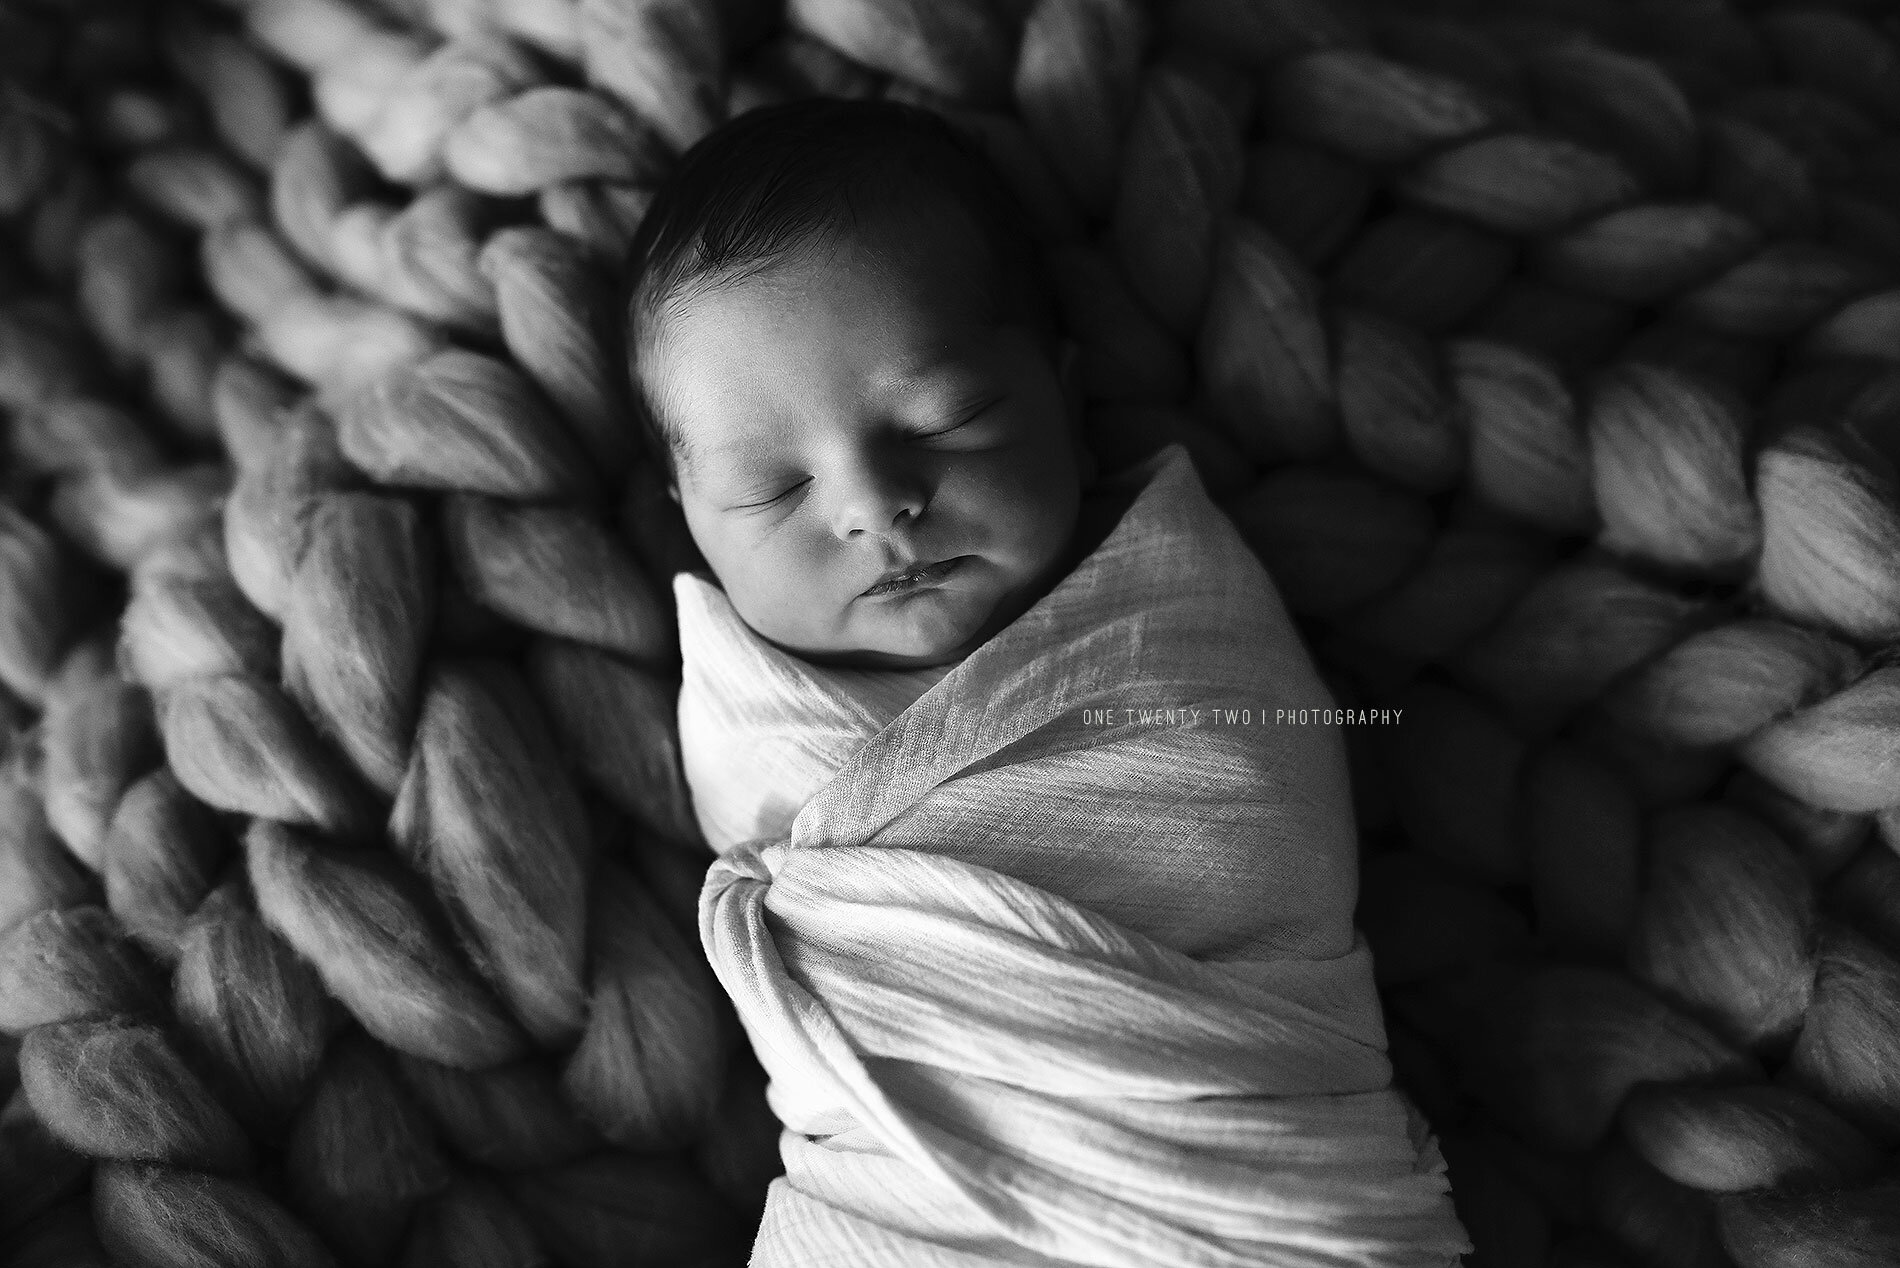 black-and-white-newborn-photo-tips-one-twenty-two-photography.jpg